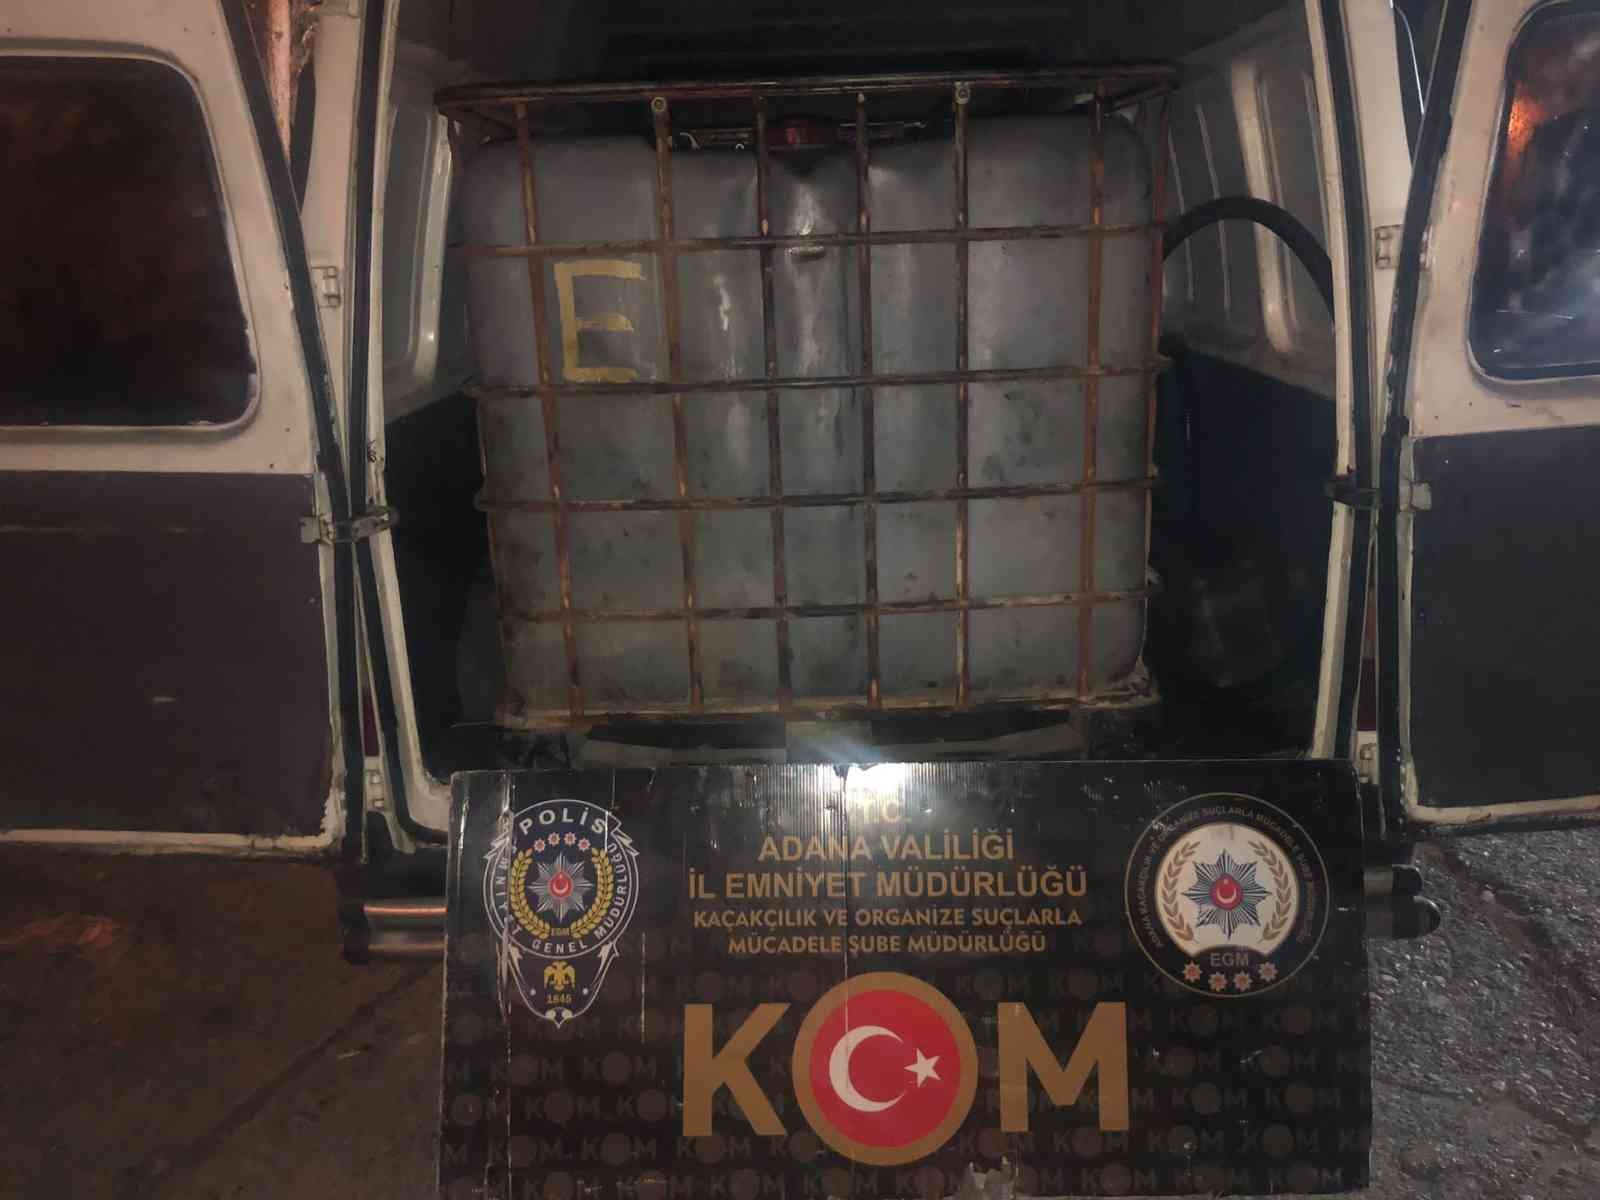 Adana’da 6 bin litre kaçak akaryakıt ele geçirildi #adana